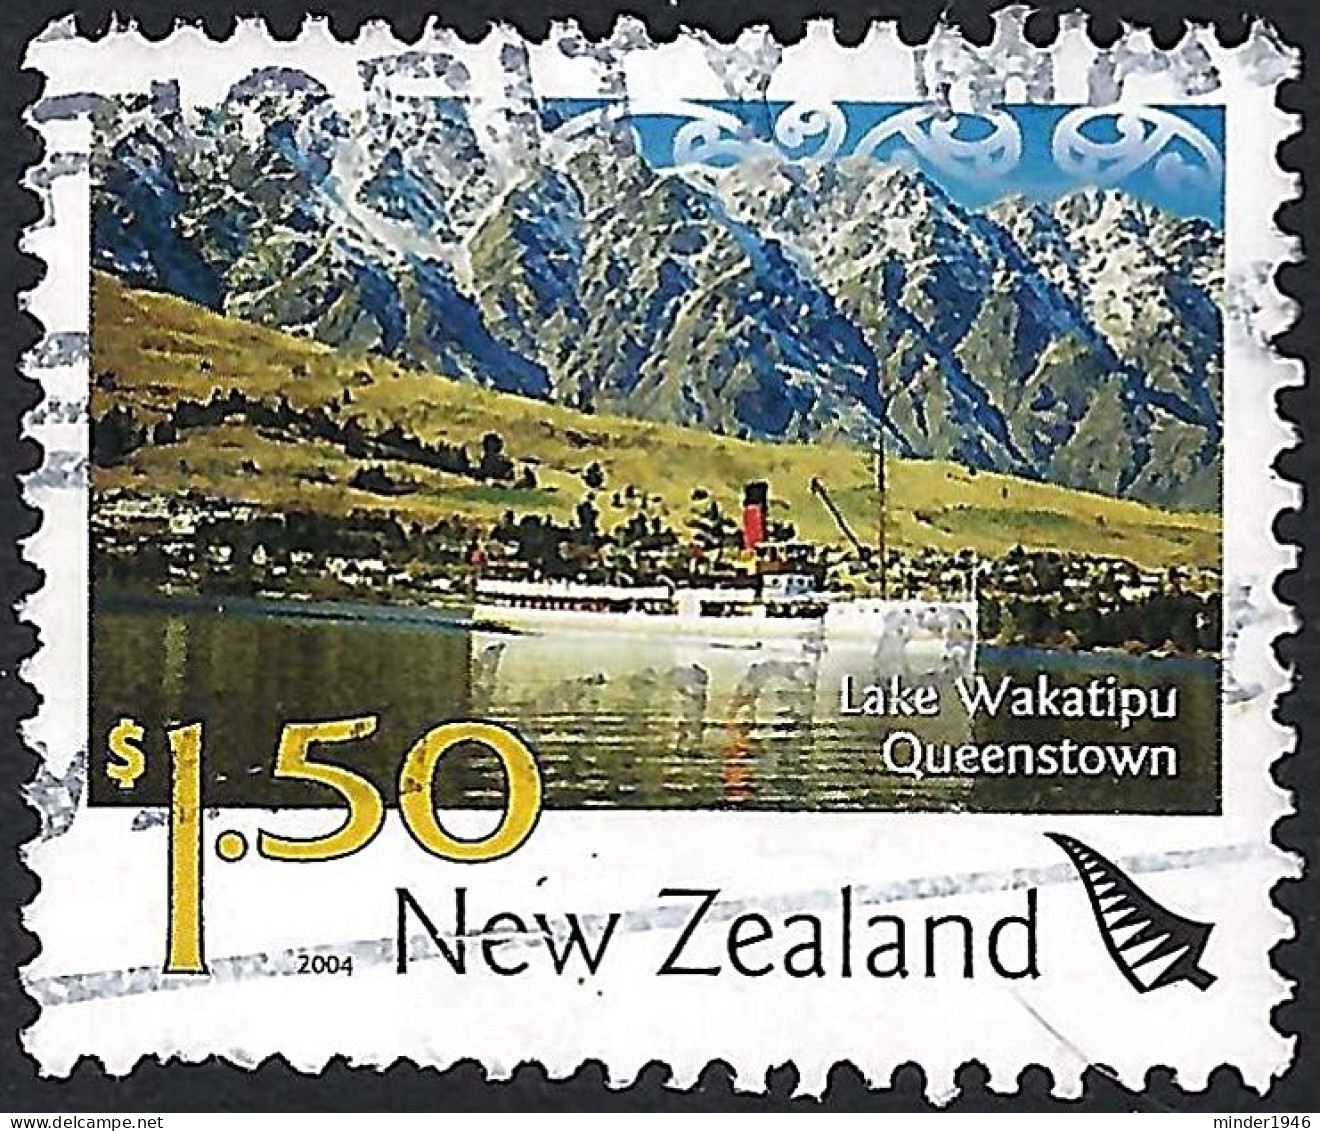 NEW ZEALAND 2004 QEII $1.50 Multicoloured, Tourist Attractions-Lake Watatipu Queenstown Used - Gebruikt